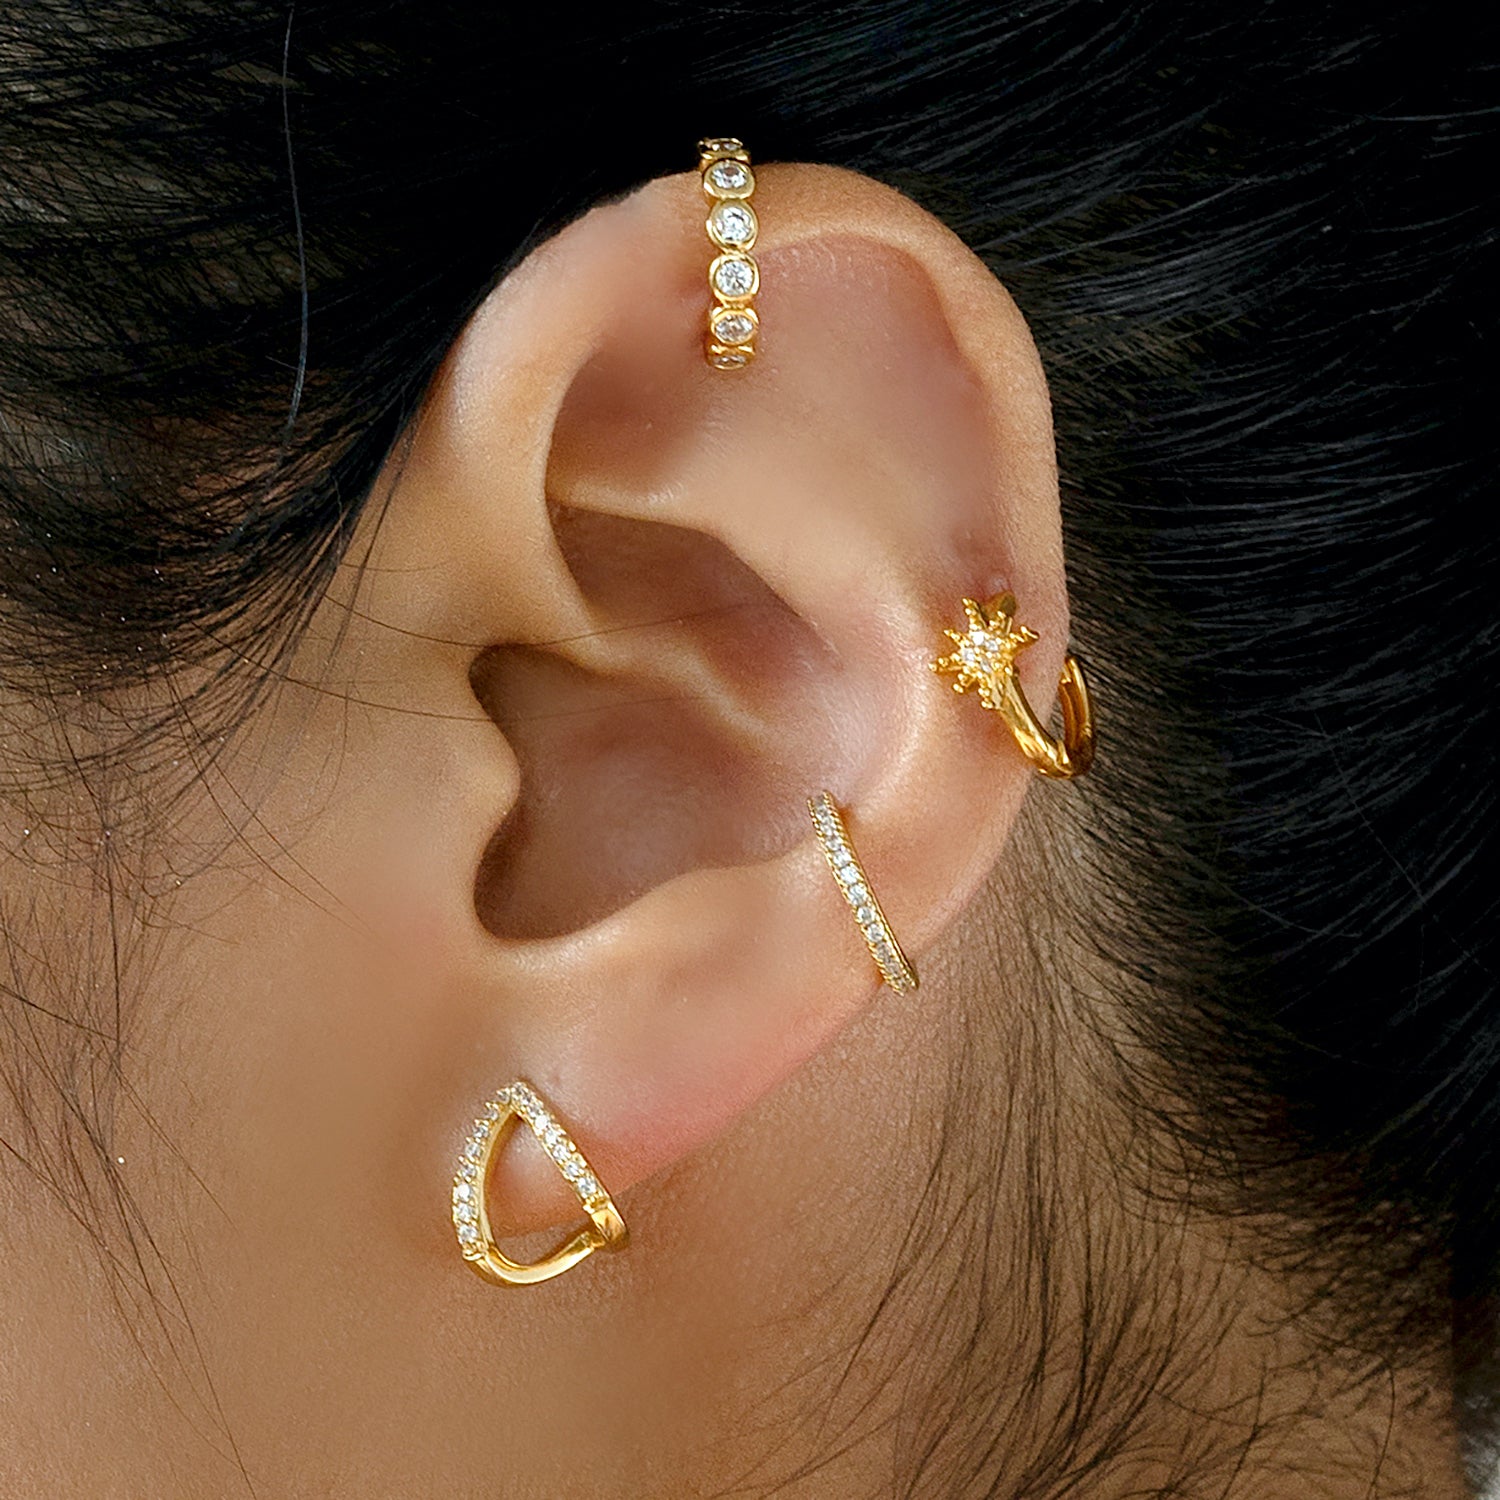 Sparkly Petit Stud Earrings 3mm – J&CO Jewellery